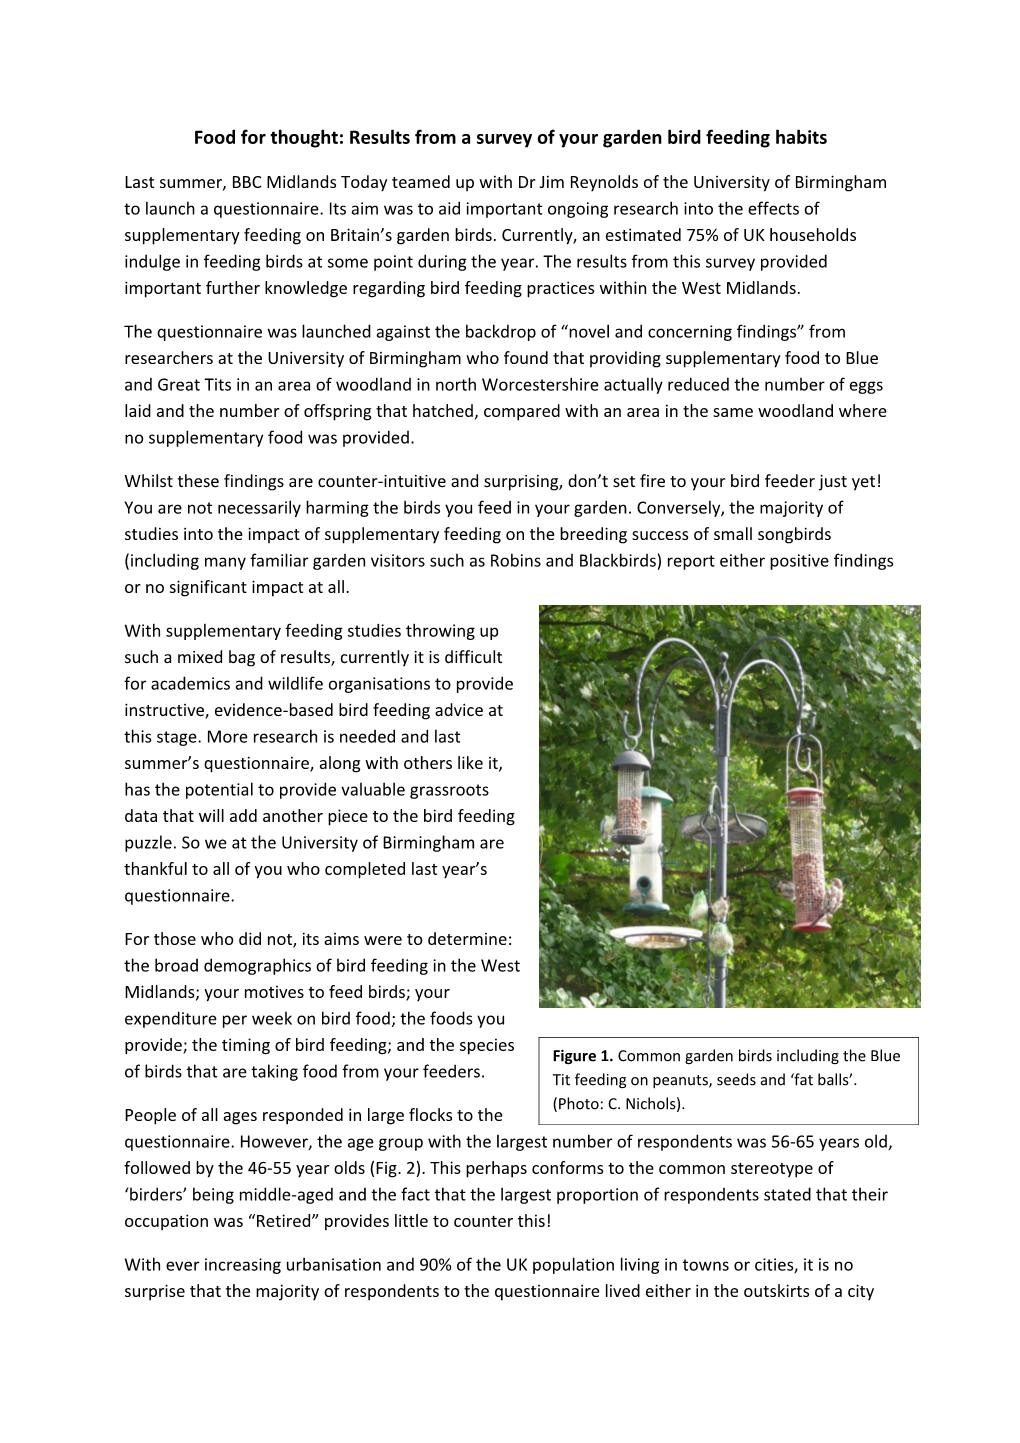 Garden Bird Feeding Habits of the General Public in the West Midlands Region